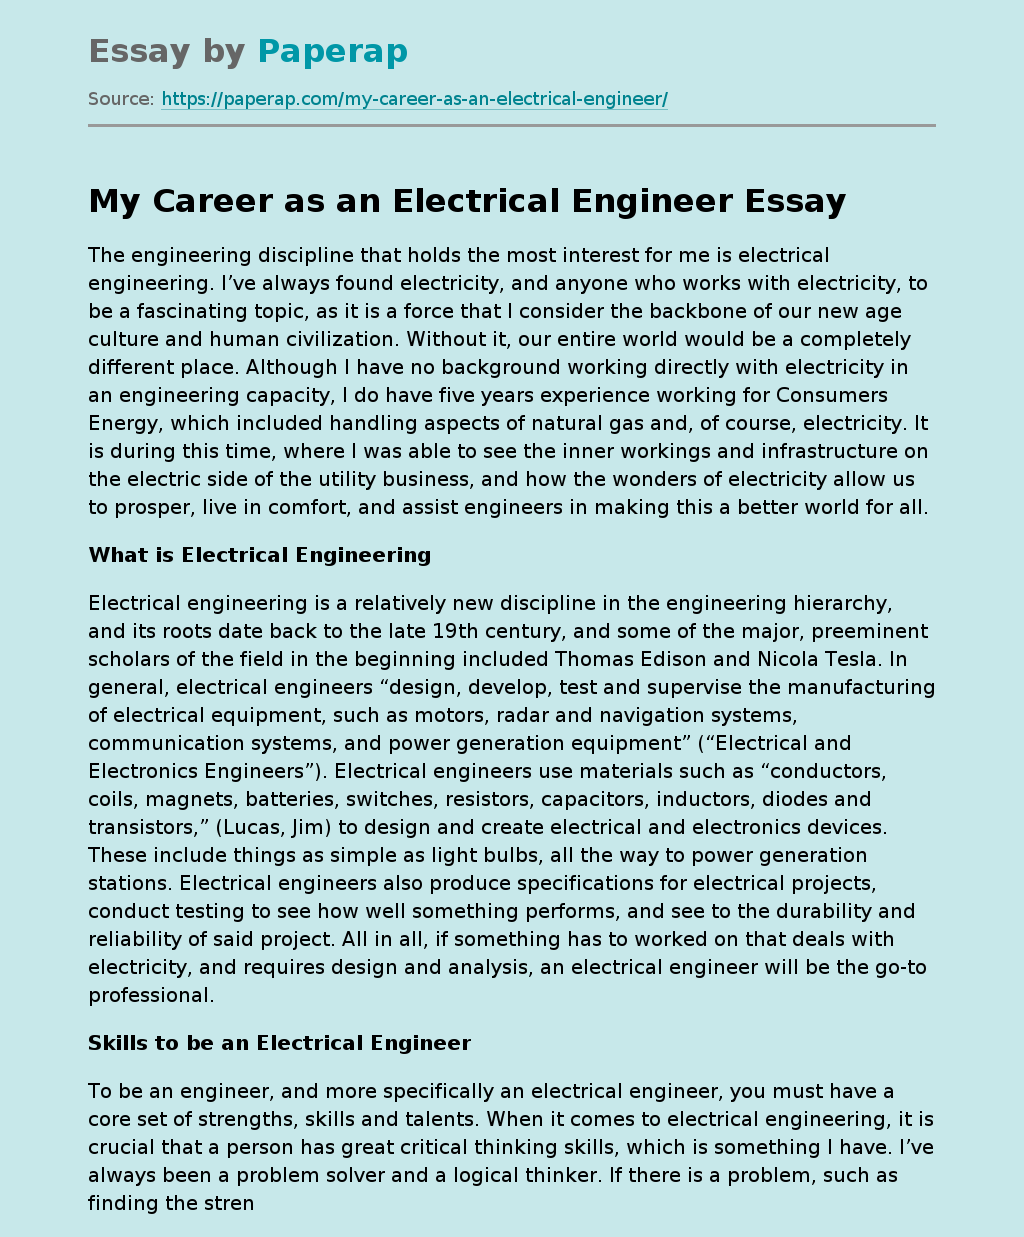 My Career as an Electrical Engineer